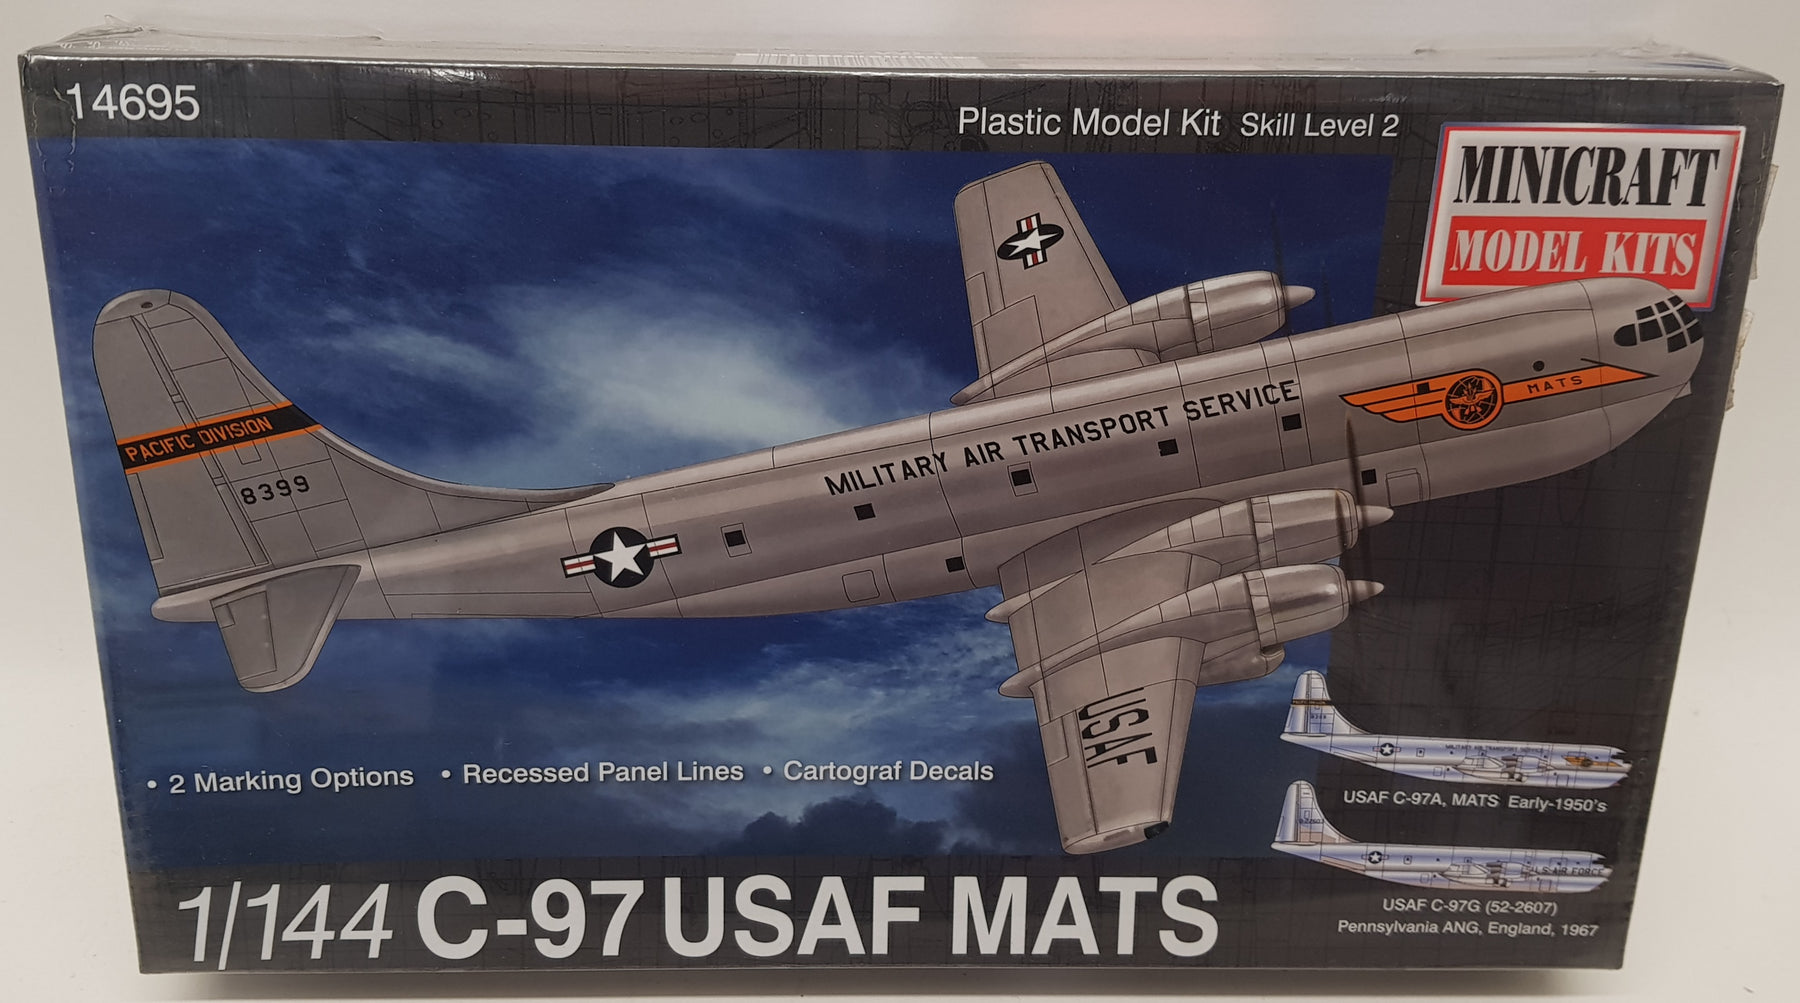 Minicraft Model Aircraft Kit 14695 - 1/144 Scale C-97 USAF MATS